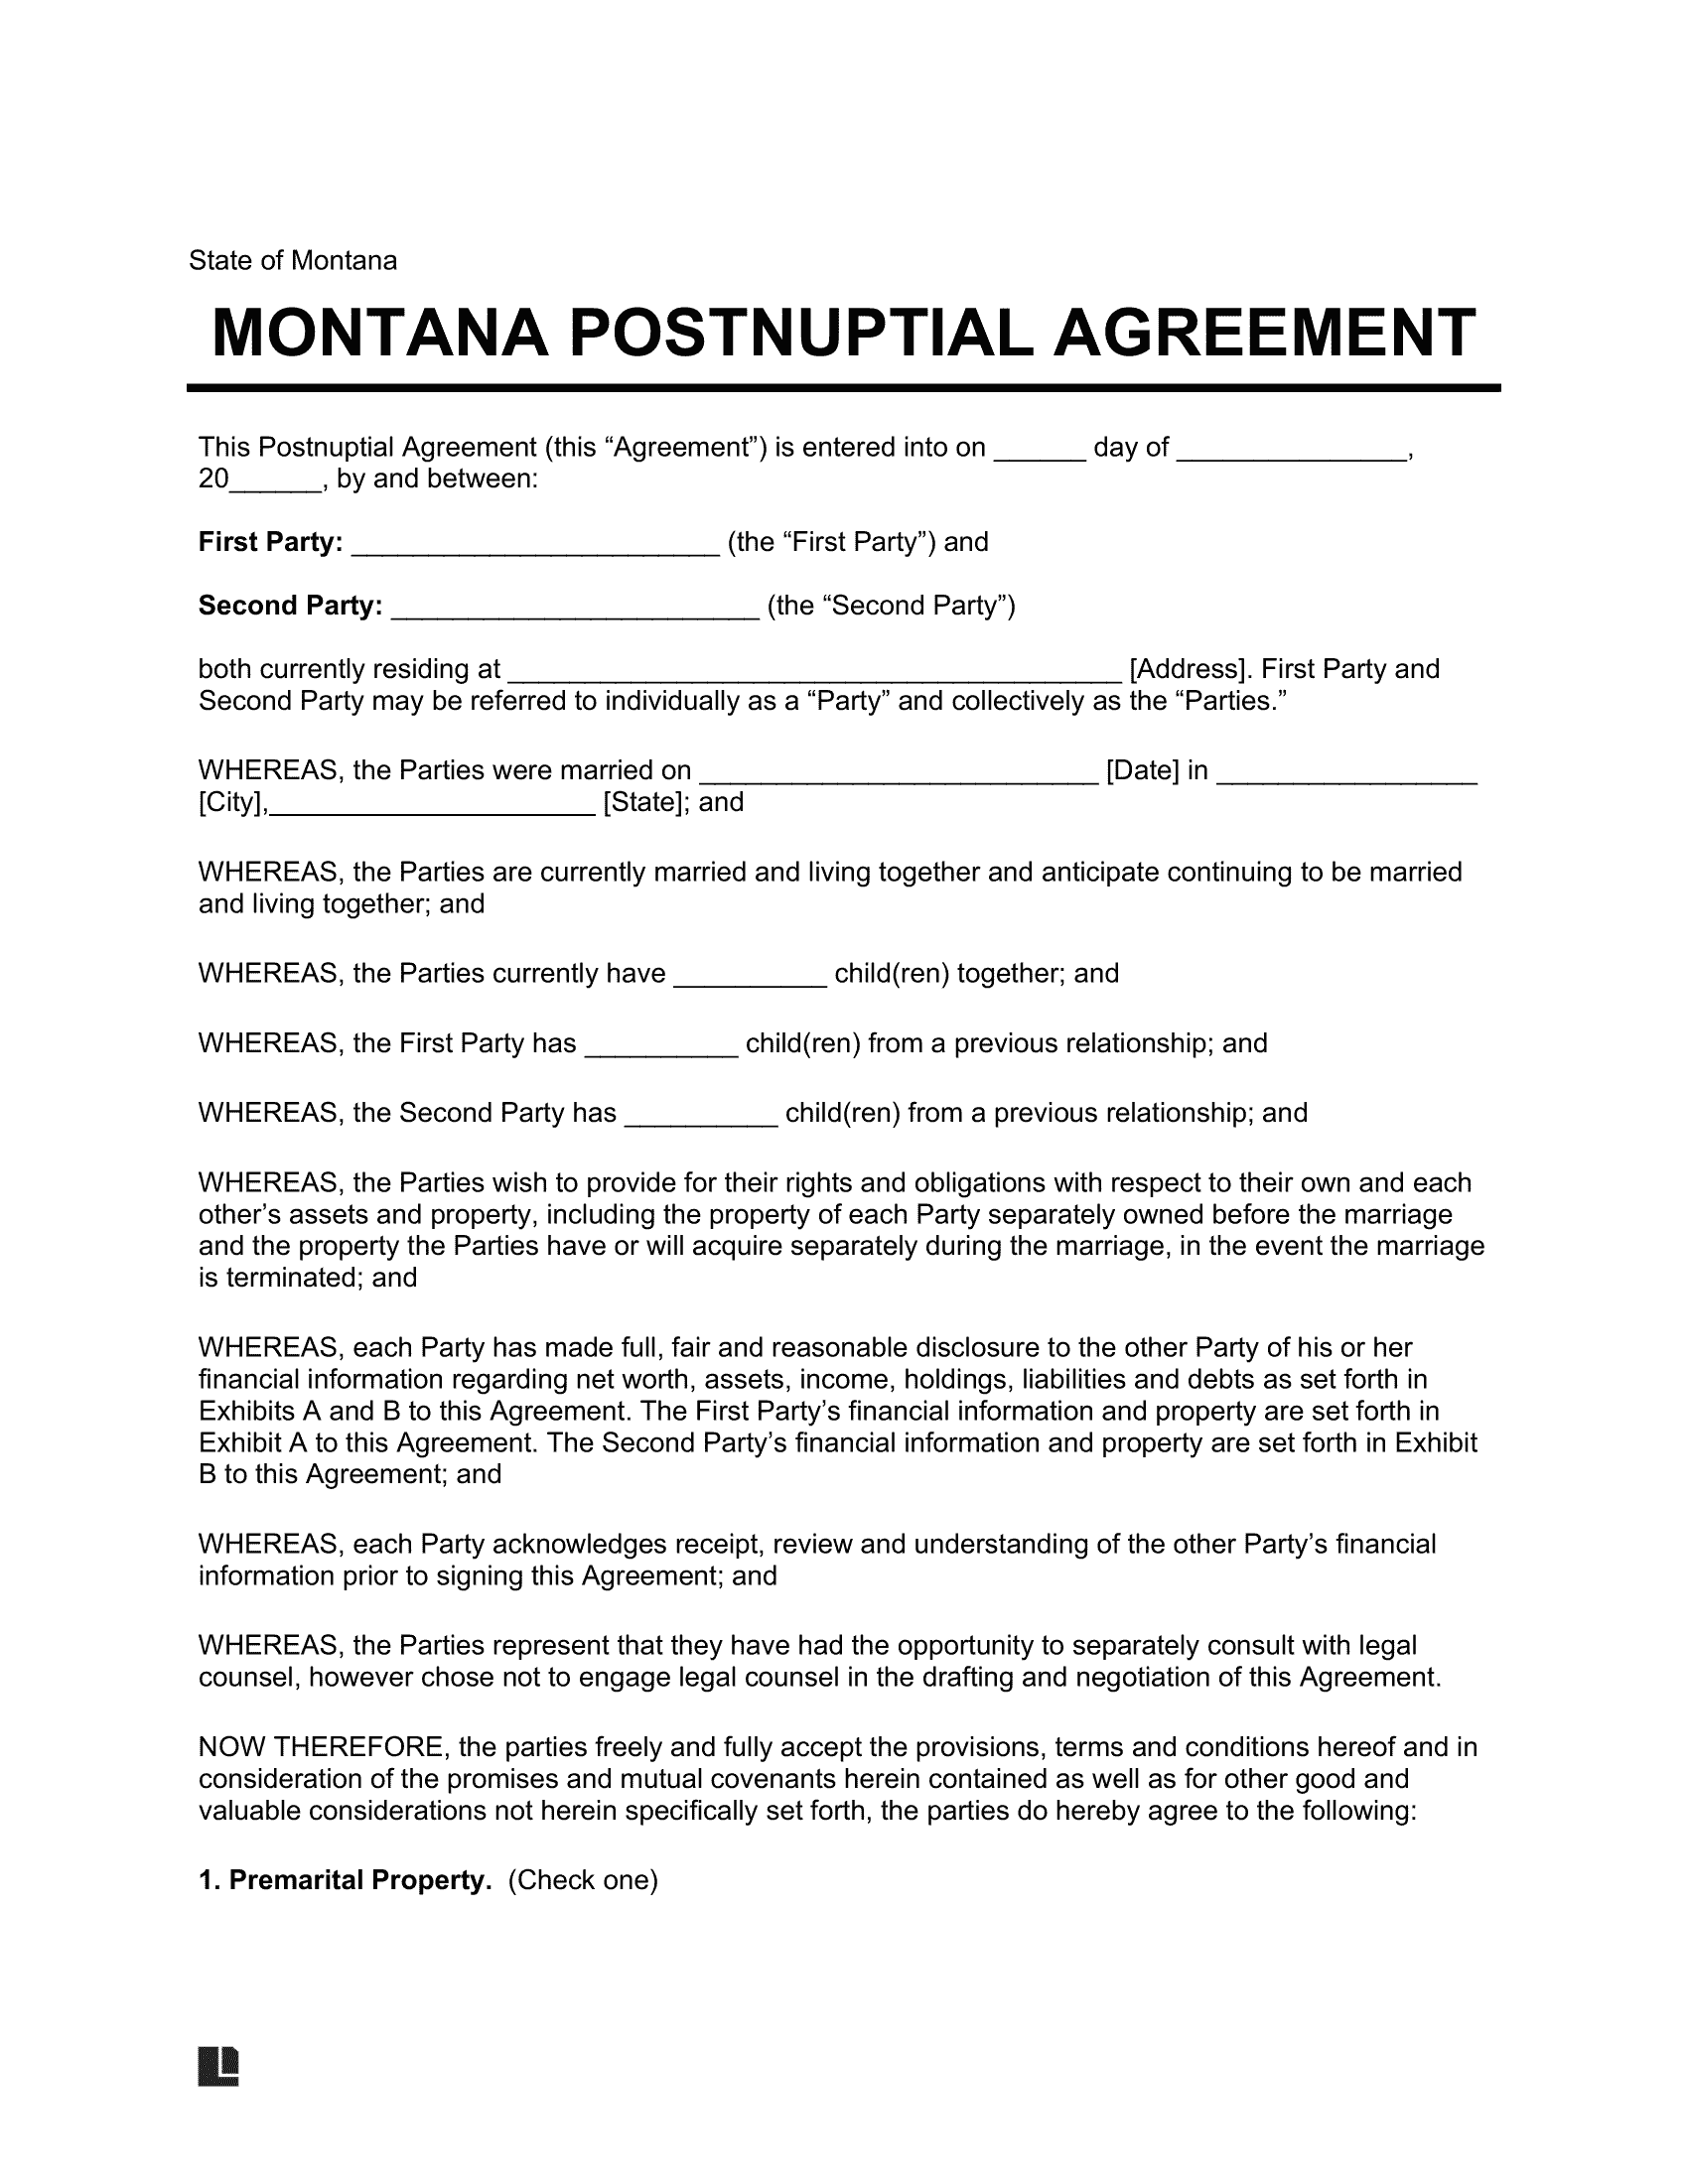 Montana Postnuptial Agreement Template